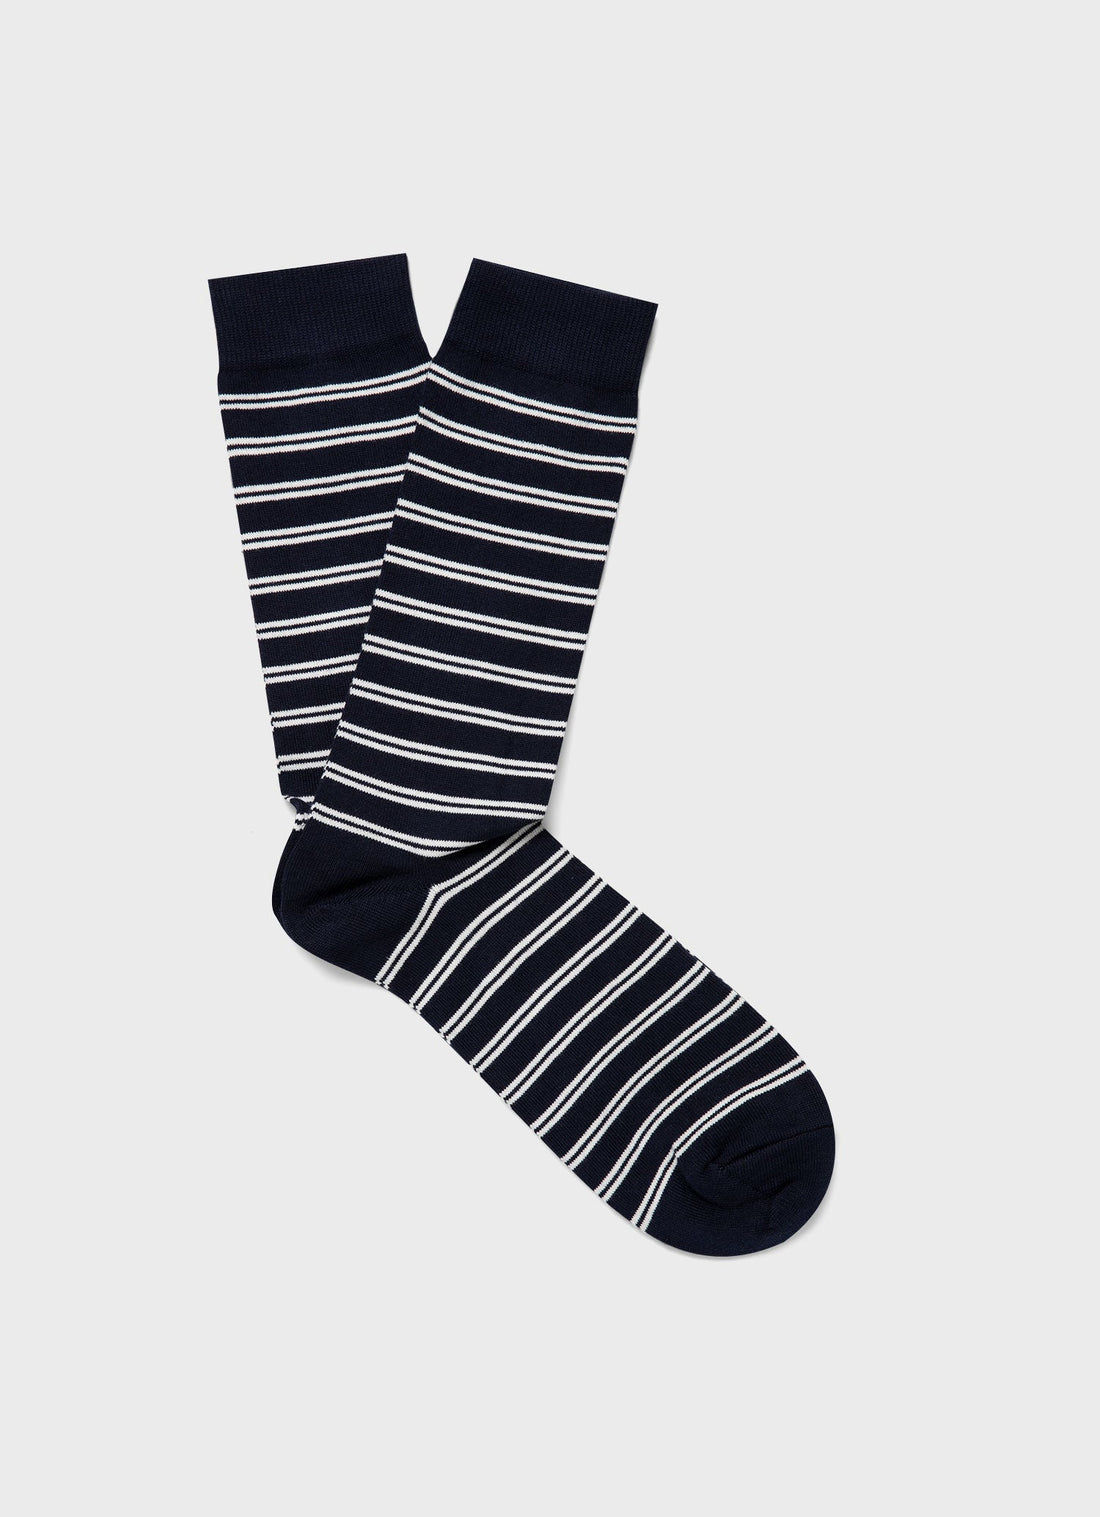 Men's Cotton Socks in Navy/Ecru Tramline Stripe